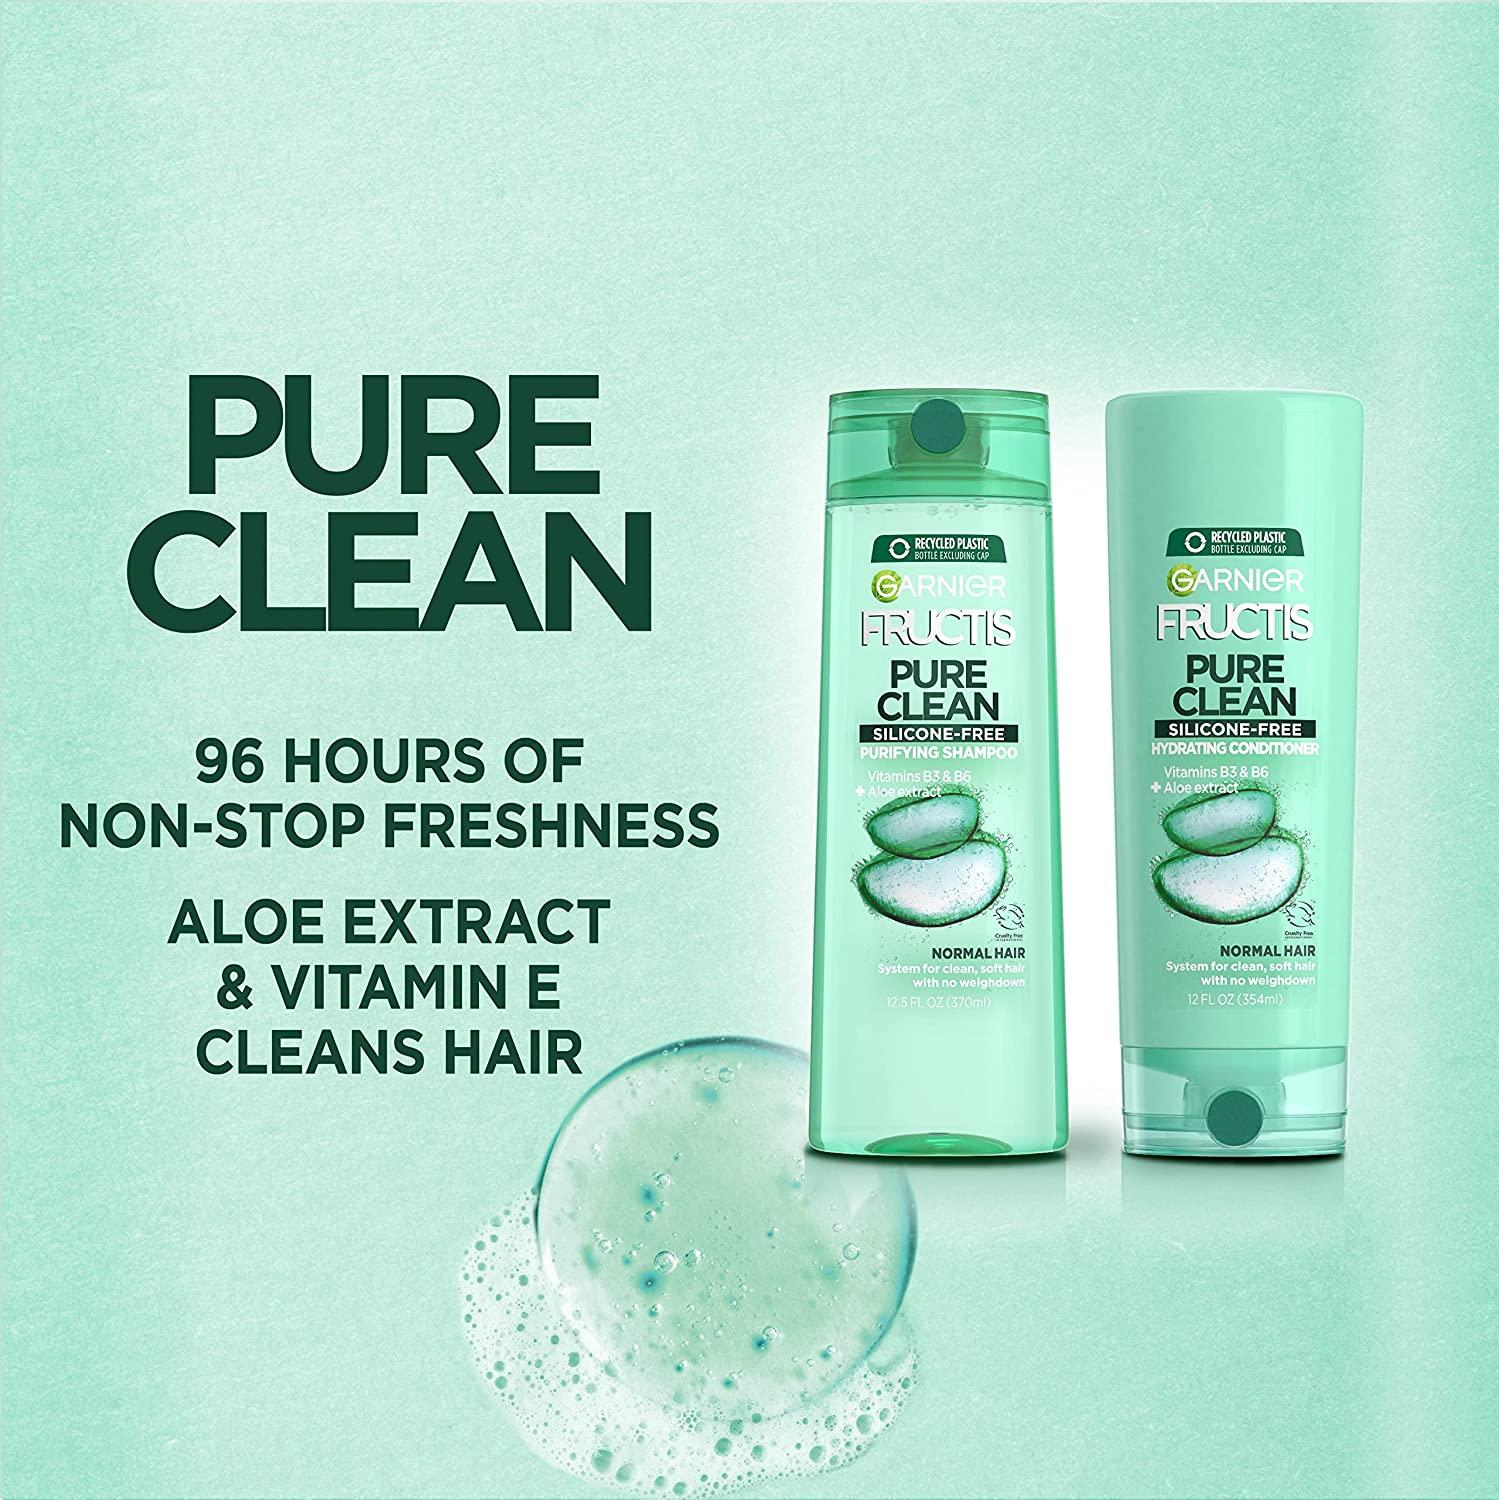 Garnier Fructis Pure Clean Fortifying Shampoo with Aloe 12.5 fl oz (370 ml)